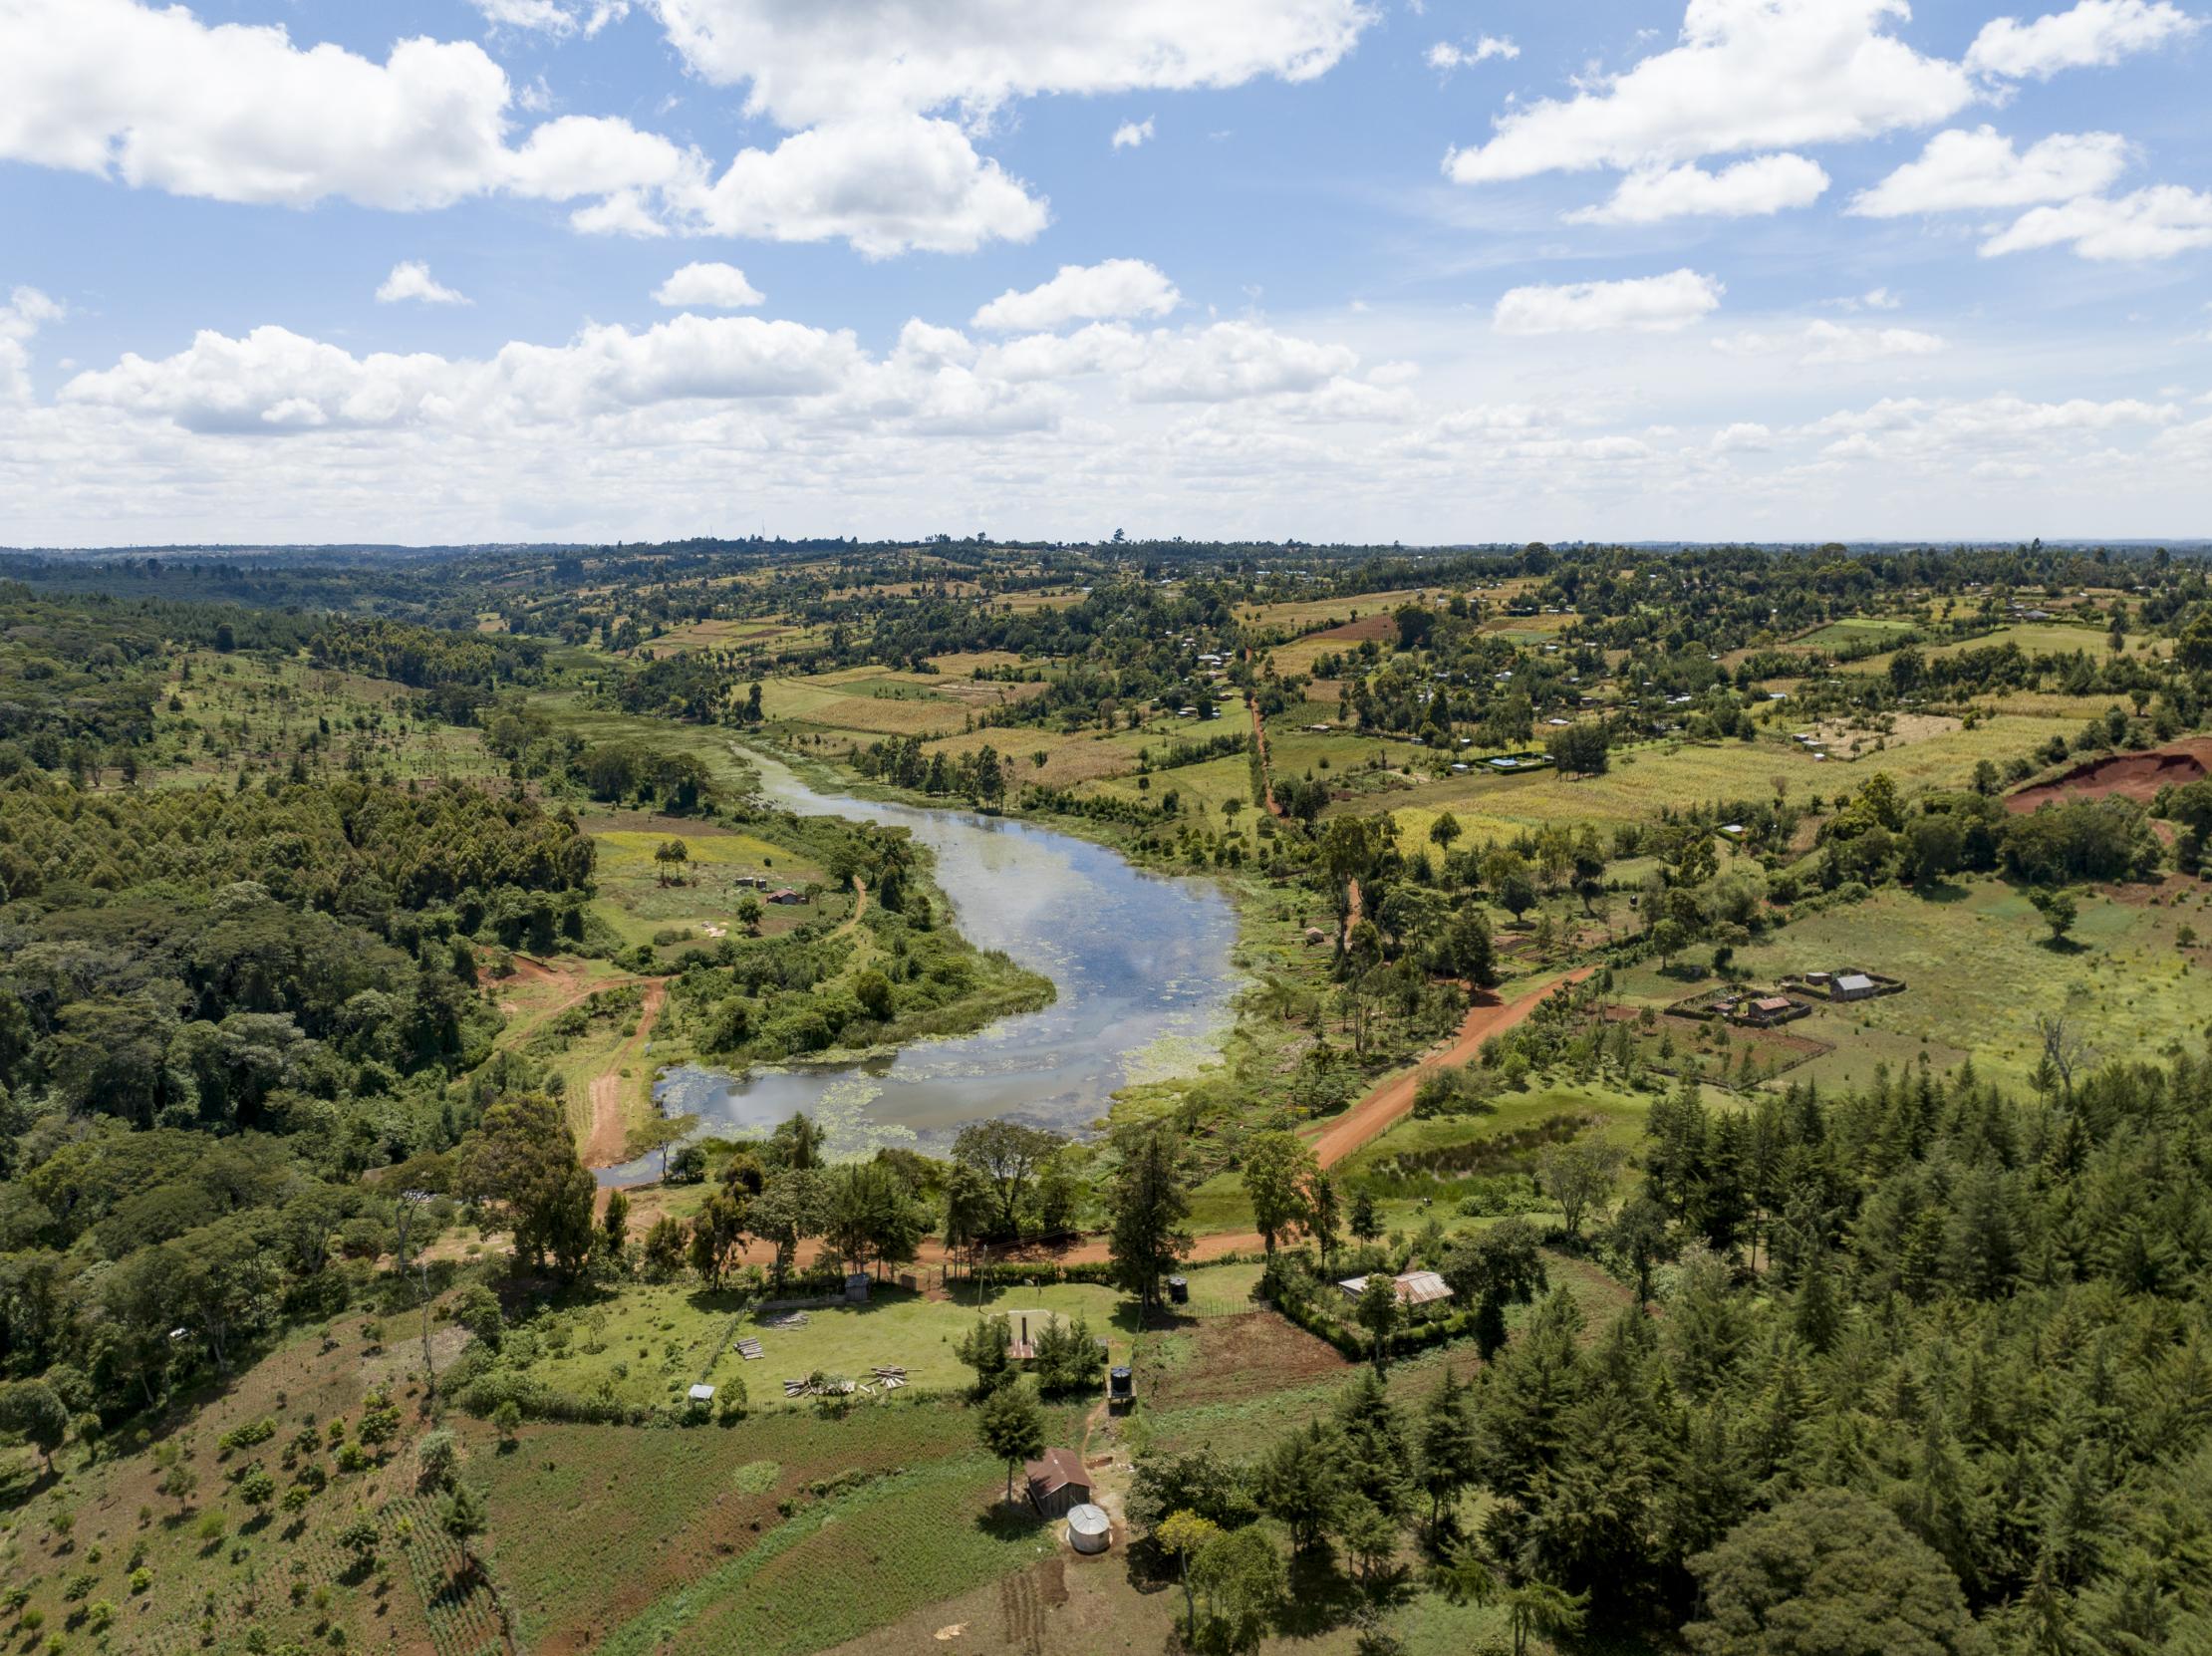 Aerial view of a river in Kenya